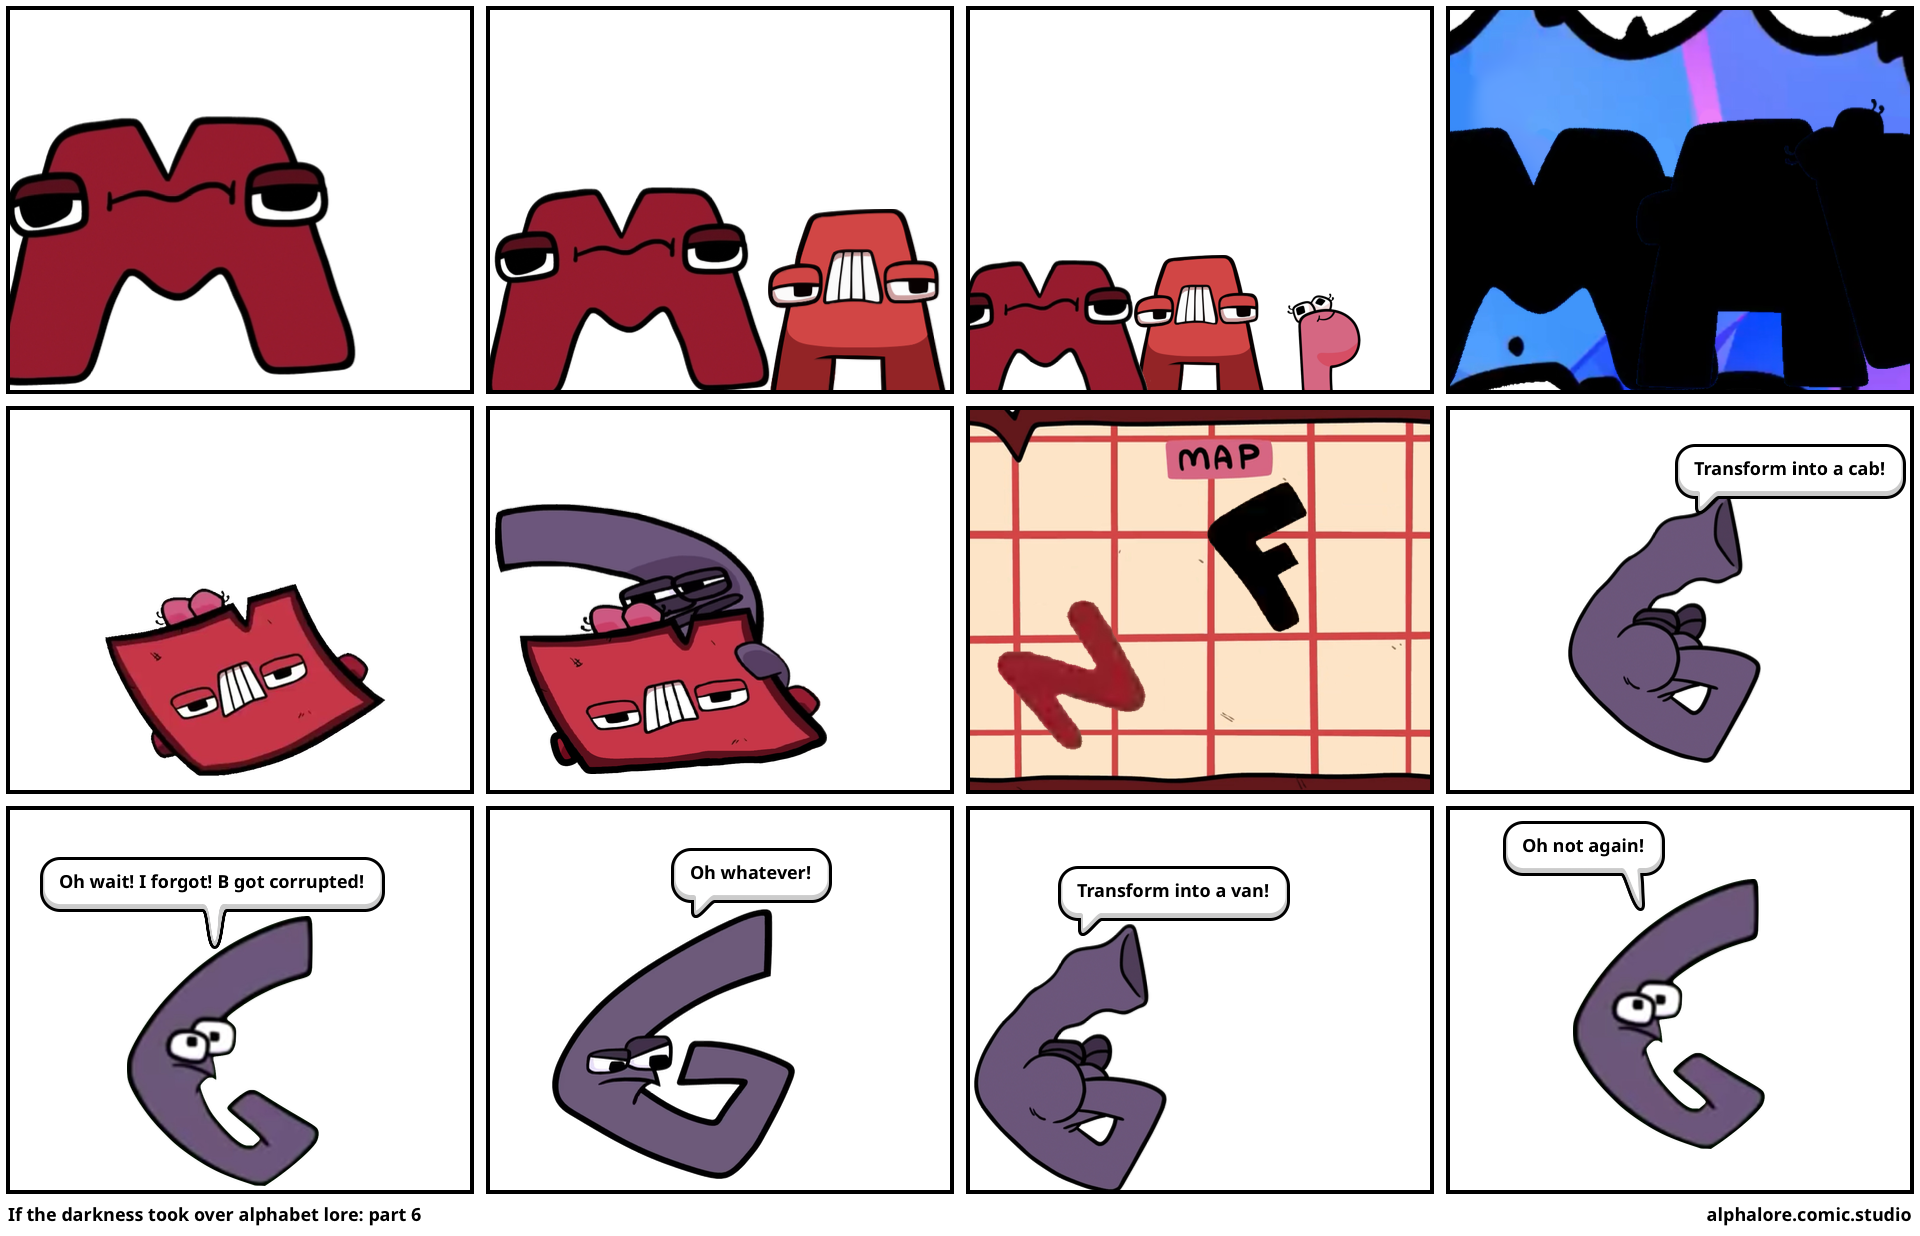 If the darkness took over alphabet lore: part 6 - Comic Studio